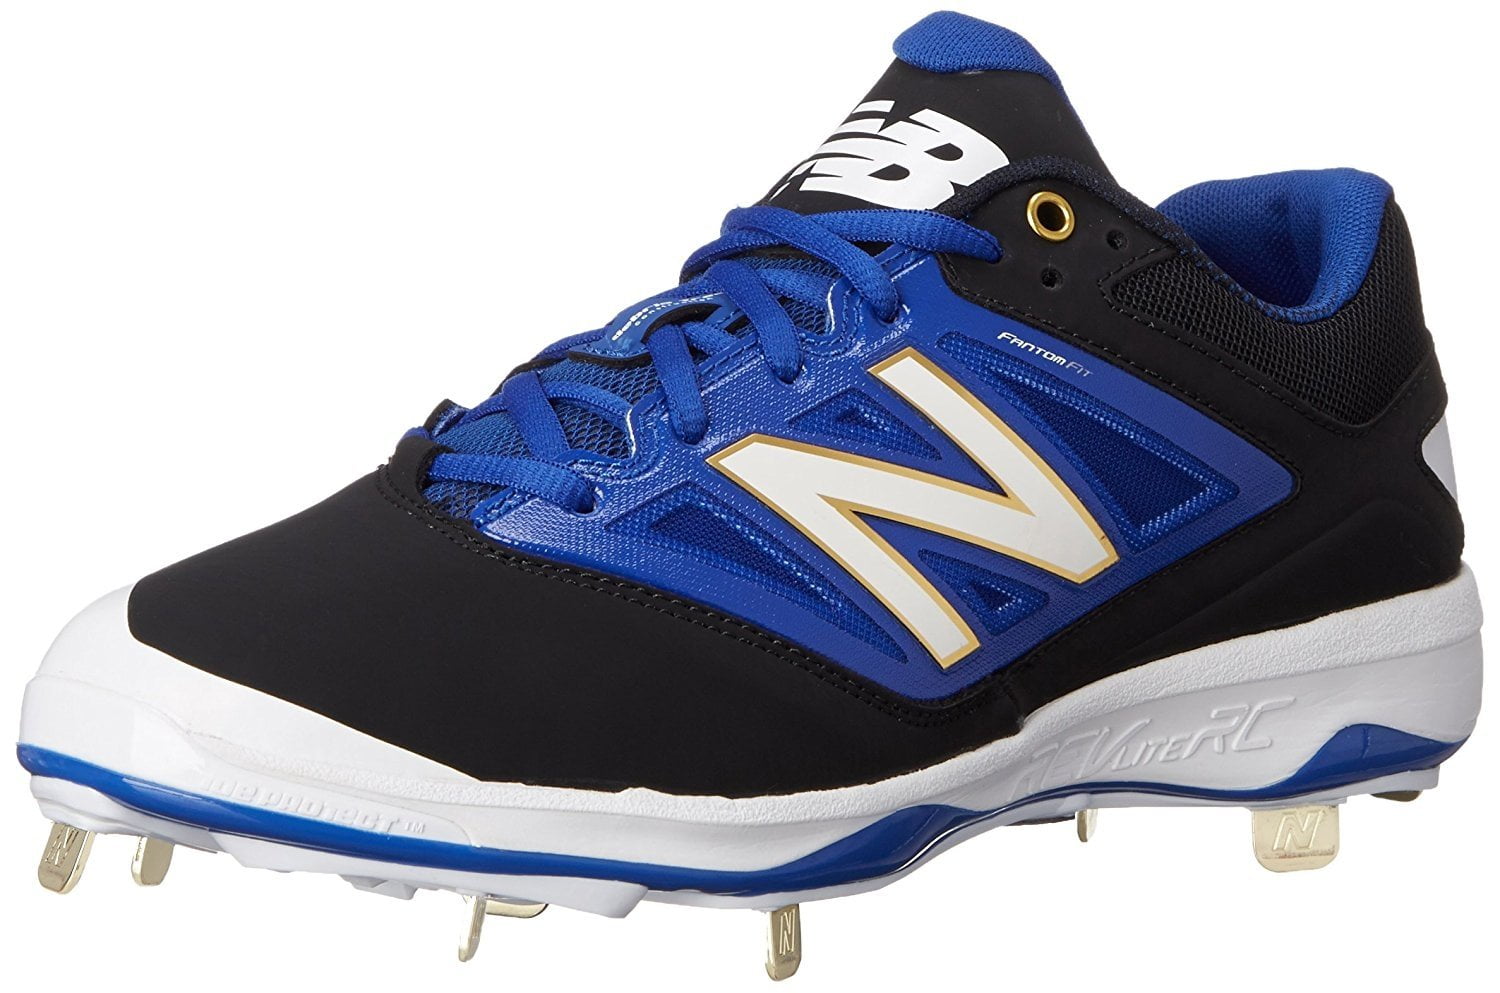 L4040V3 Cleat Baseball Shoe, Black/Blue 